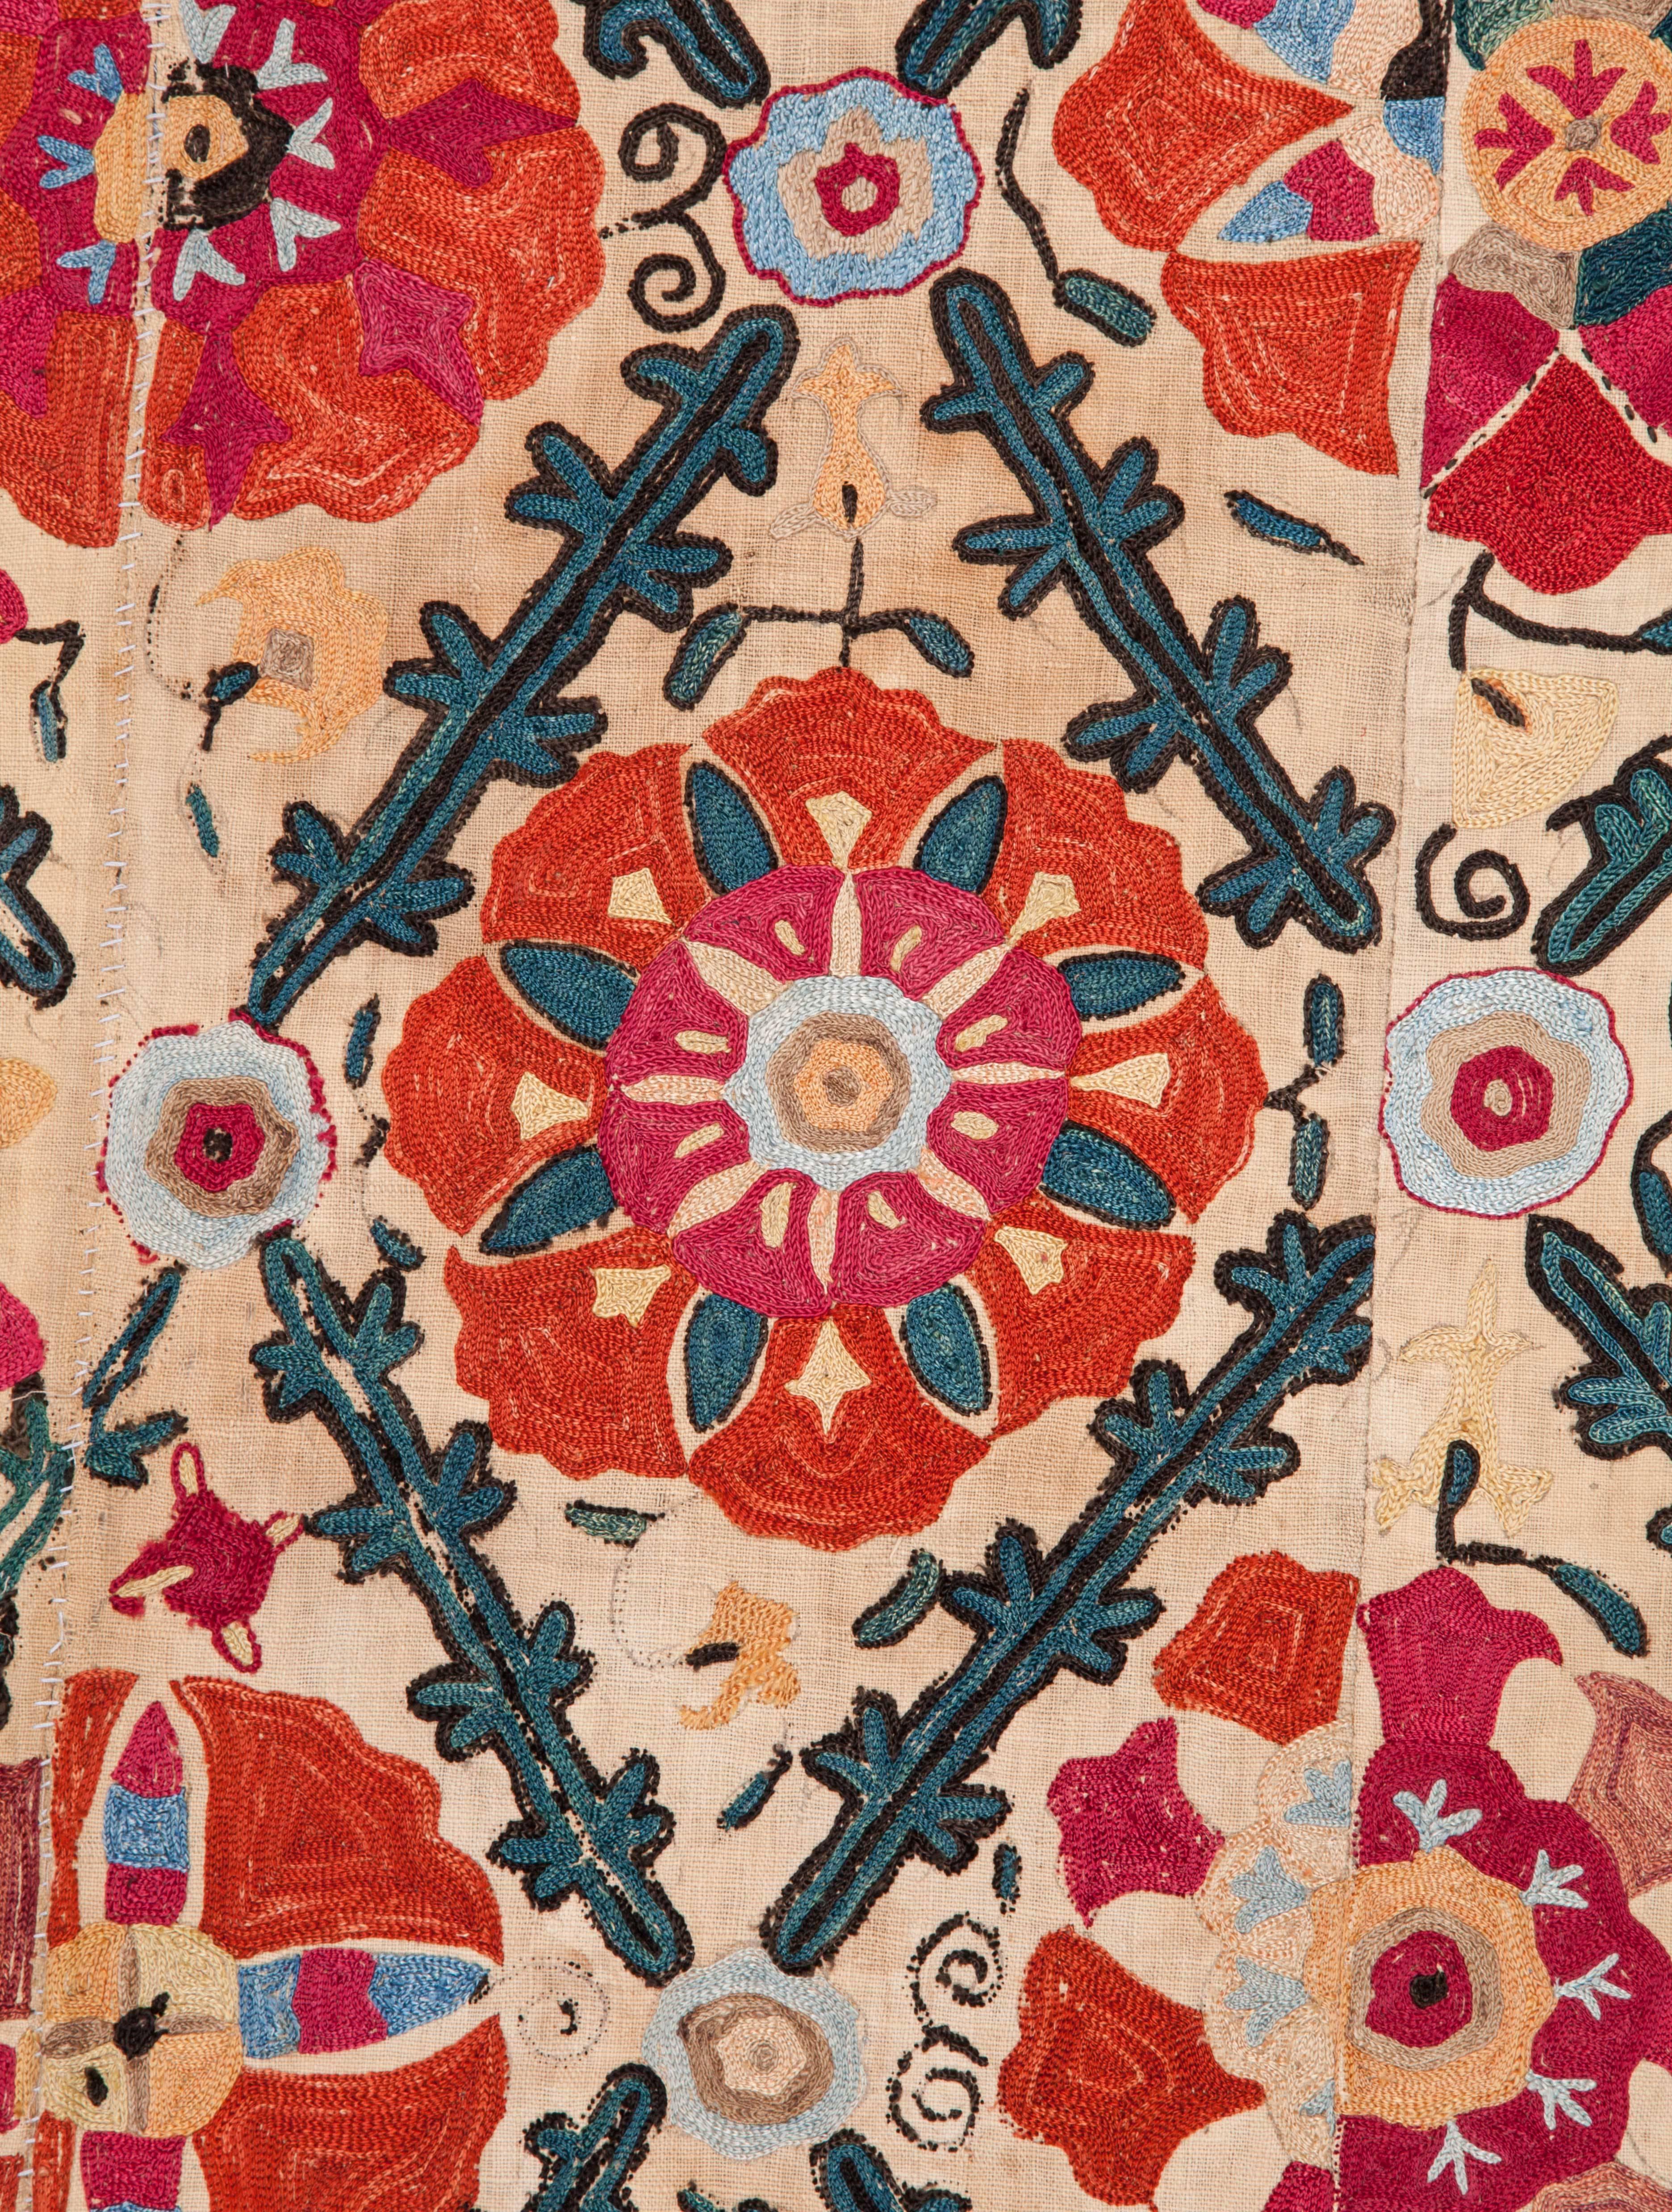 Embroidered 19th Century Uzbek Suzani from Bukhara Silk on Cotton